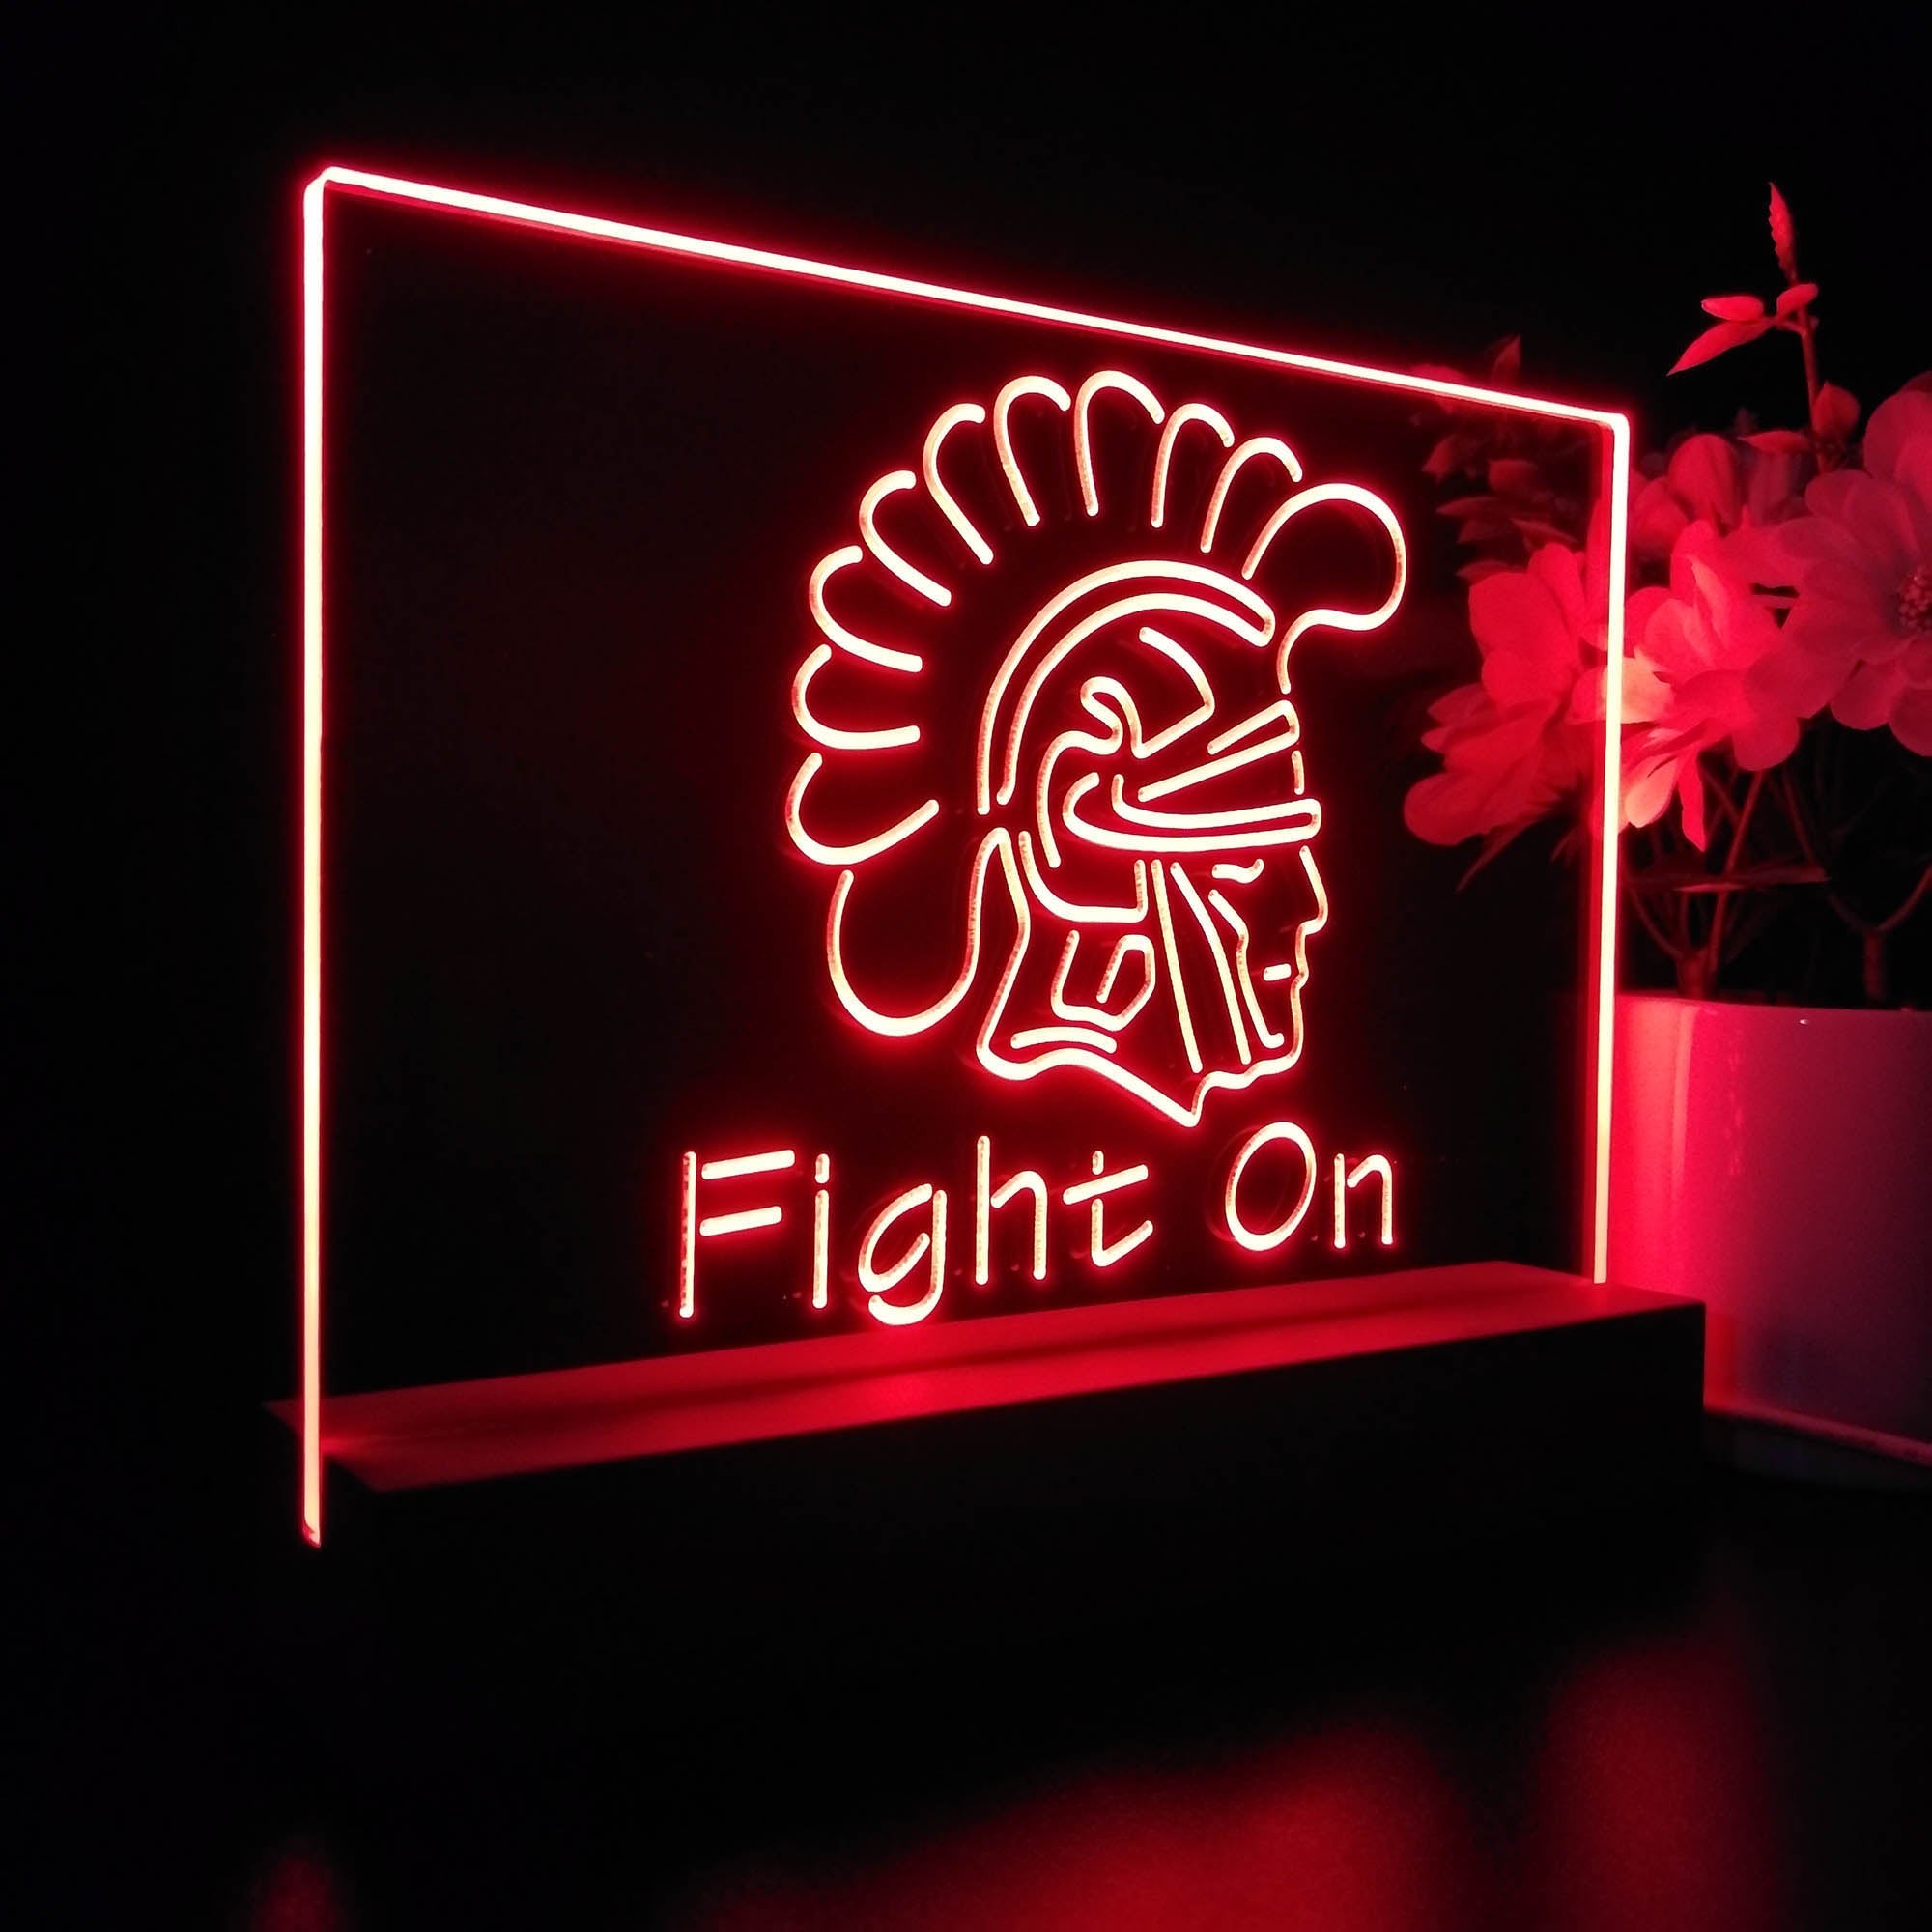 Southern California Trojans Night Light Pub Bar Lamp